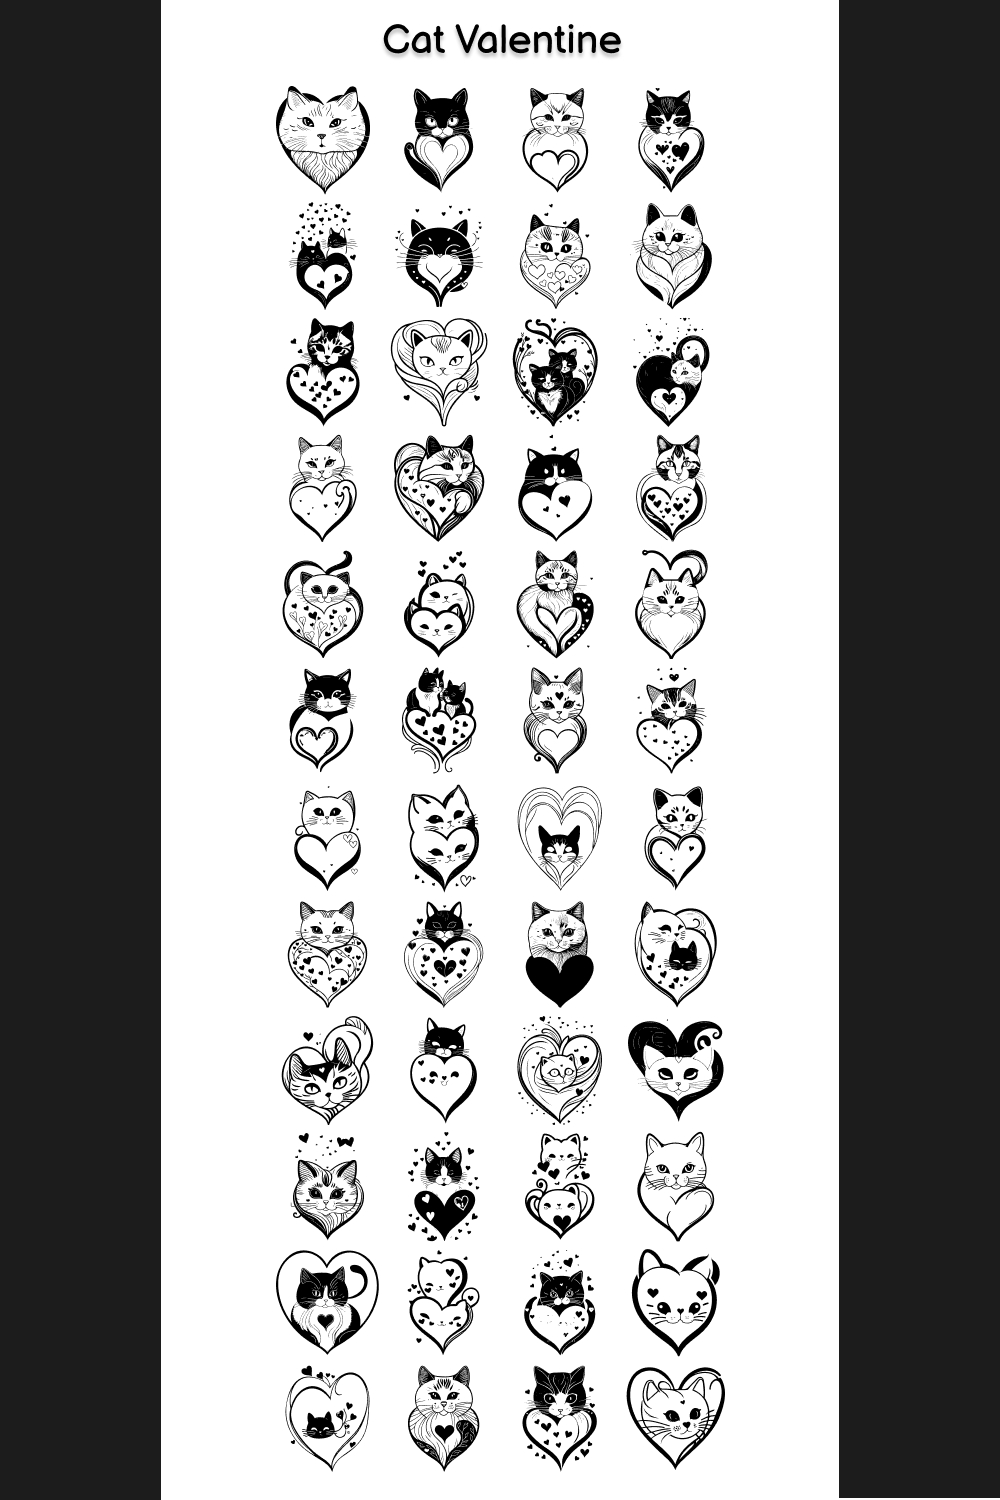 Cat Valentine Element Draw Black pinterest preview image.